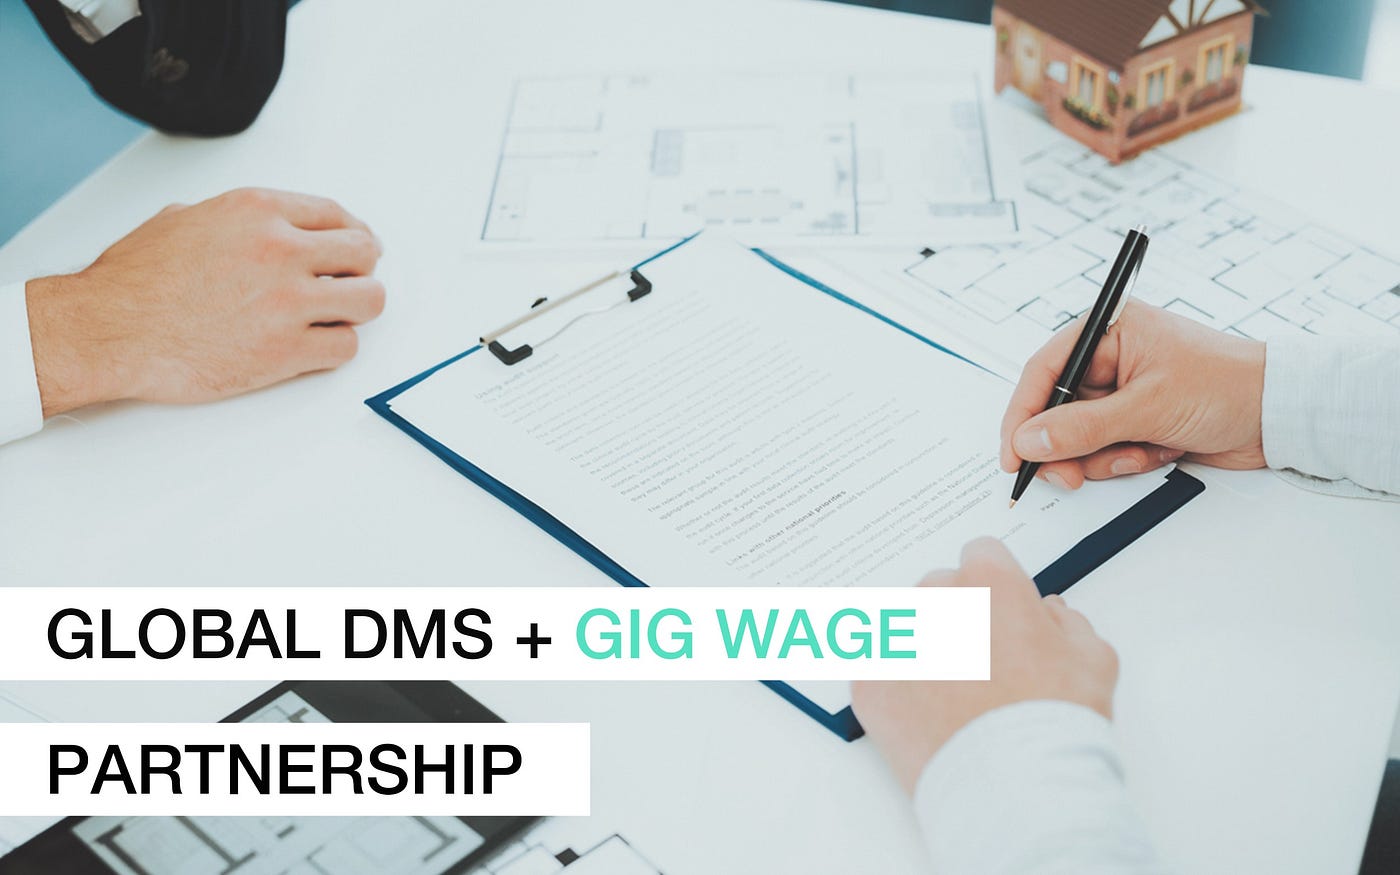 Global DMS + Gig Wage Partnership